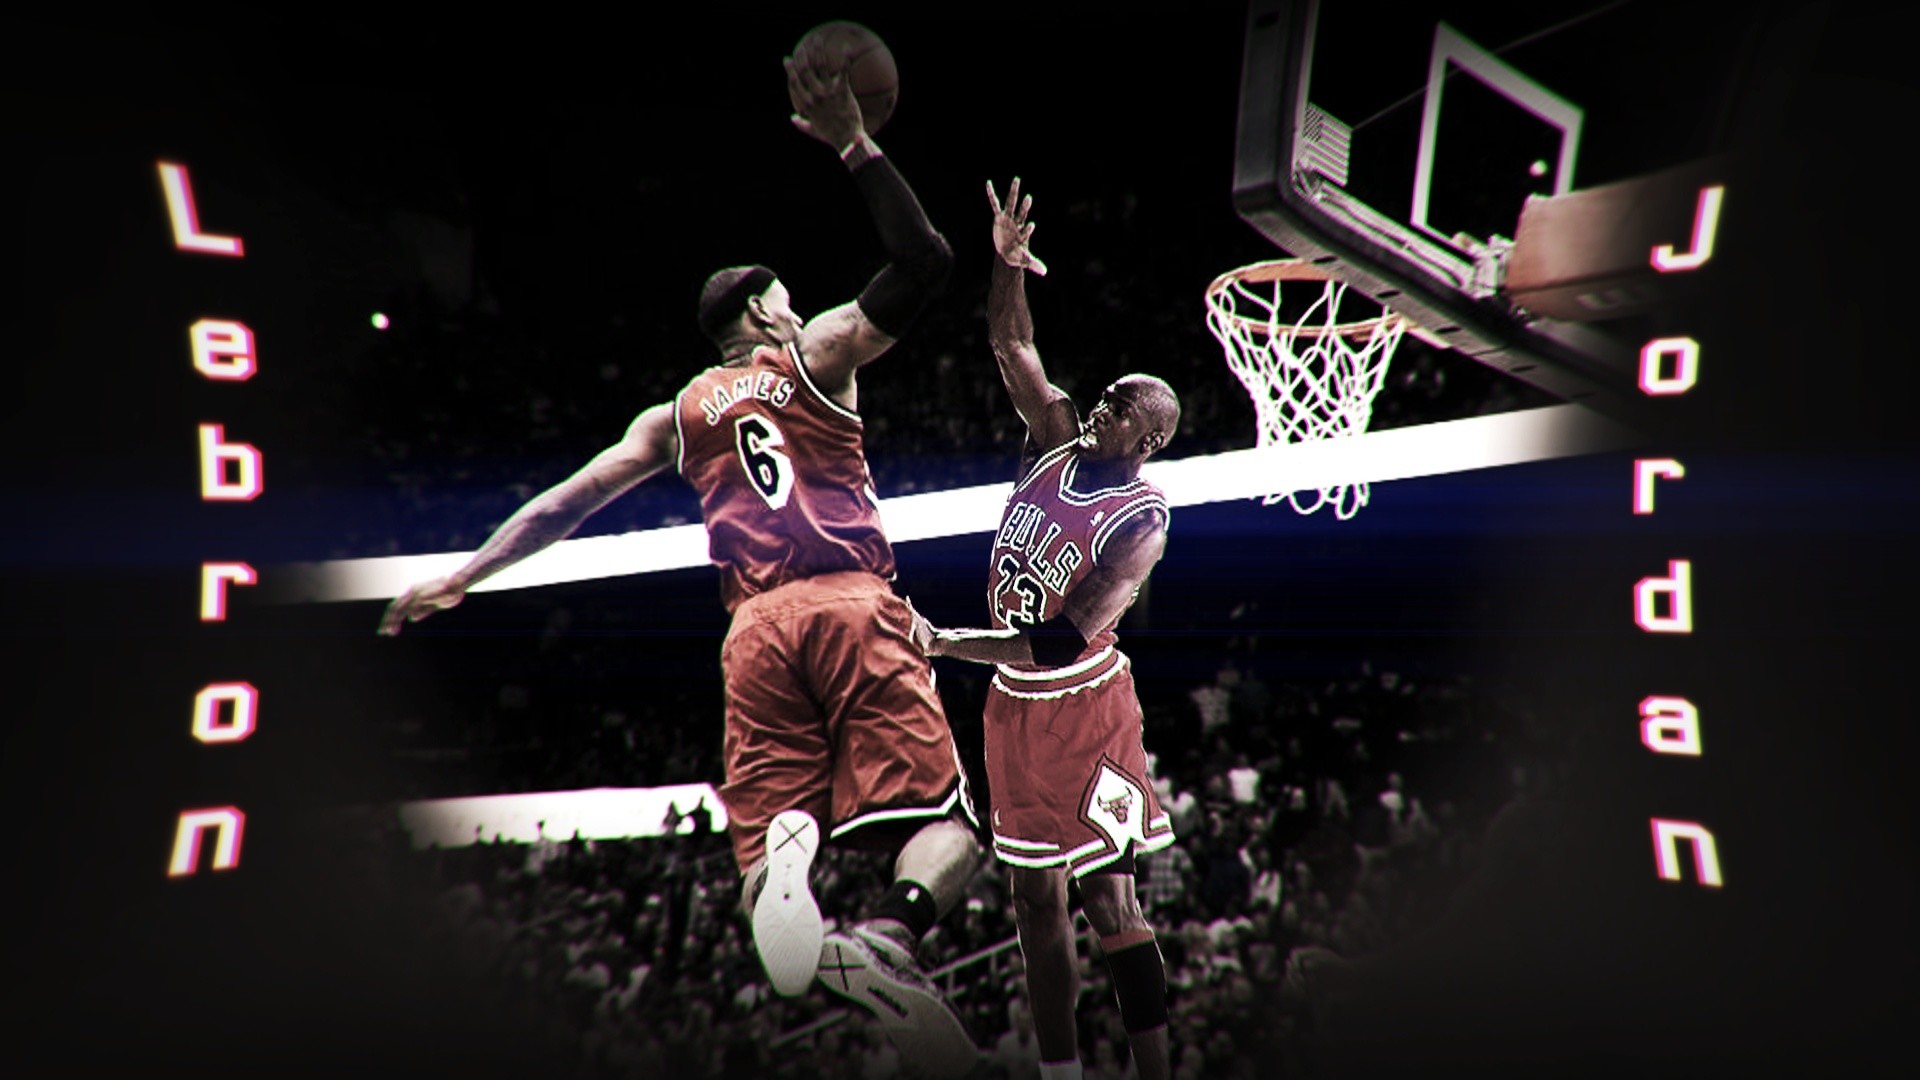 1920x1080 ... Lebron James Dunking on Michael Jordan by HardWorkRules